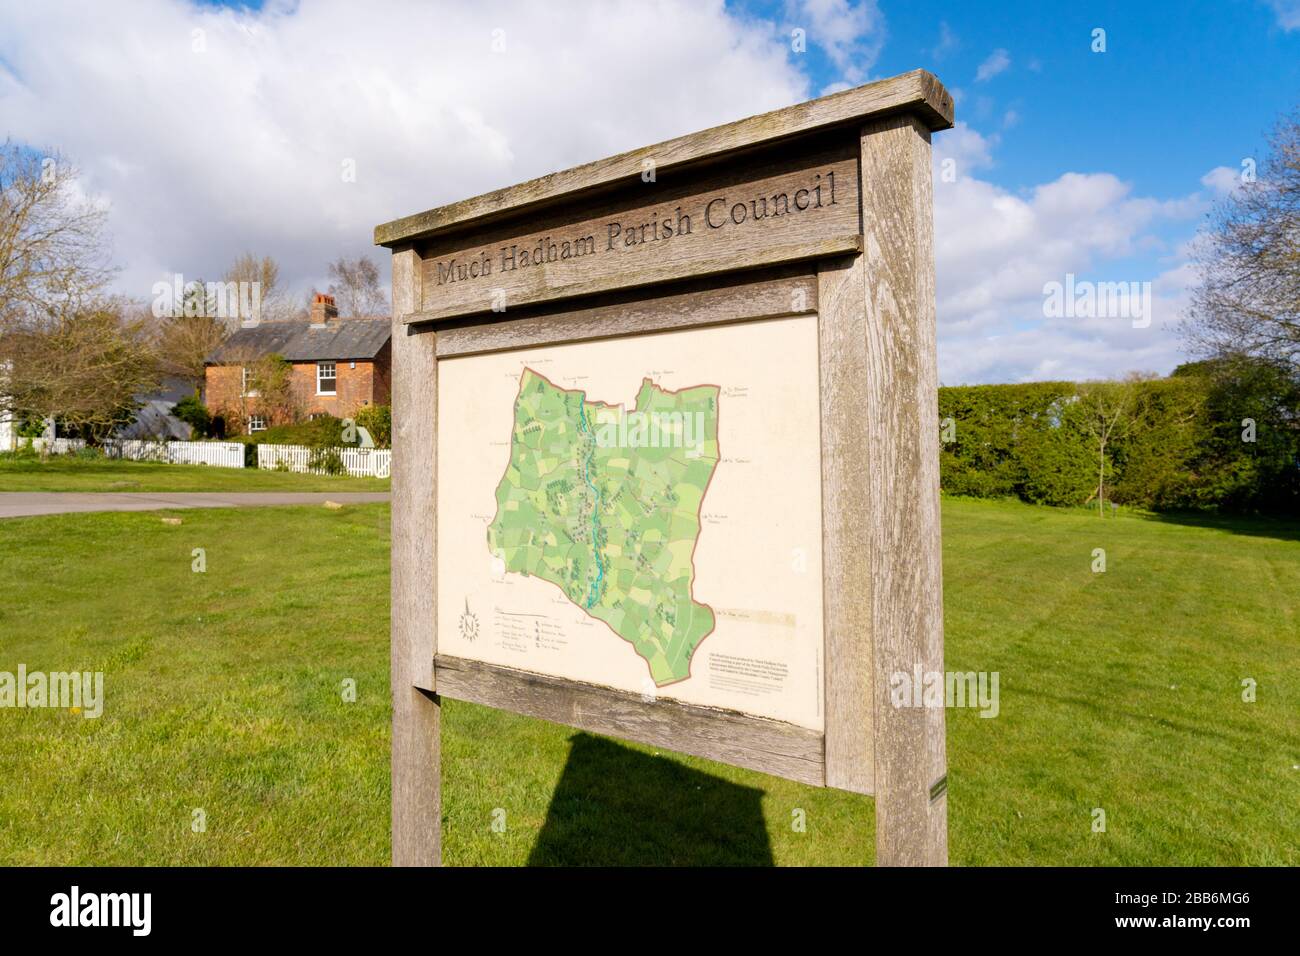 Village noticeboard located in Perry Green, Much Hadham, Hertfordshire. UK Stock Photo